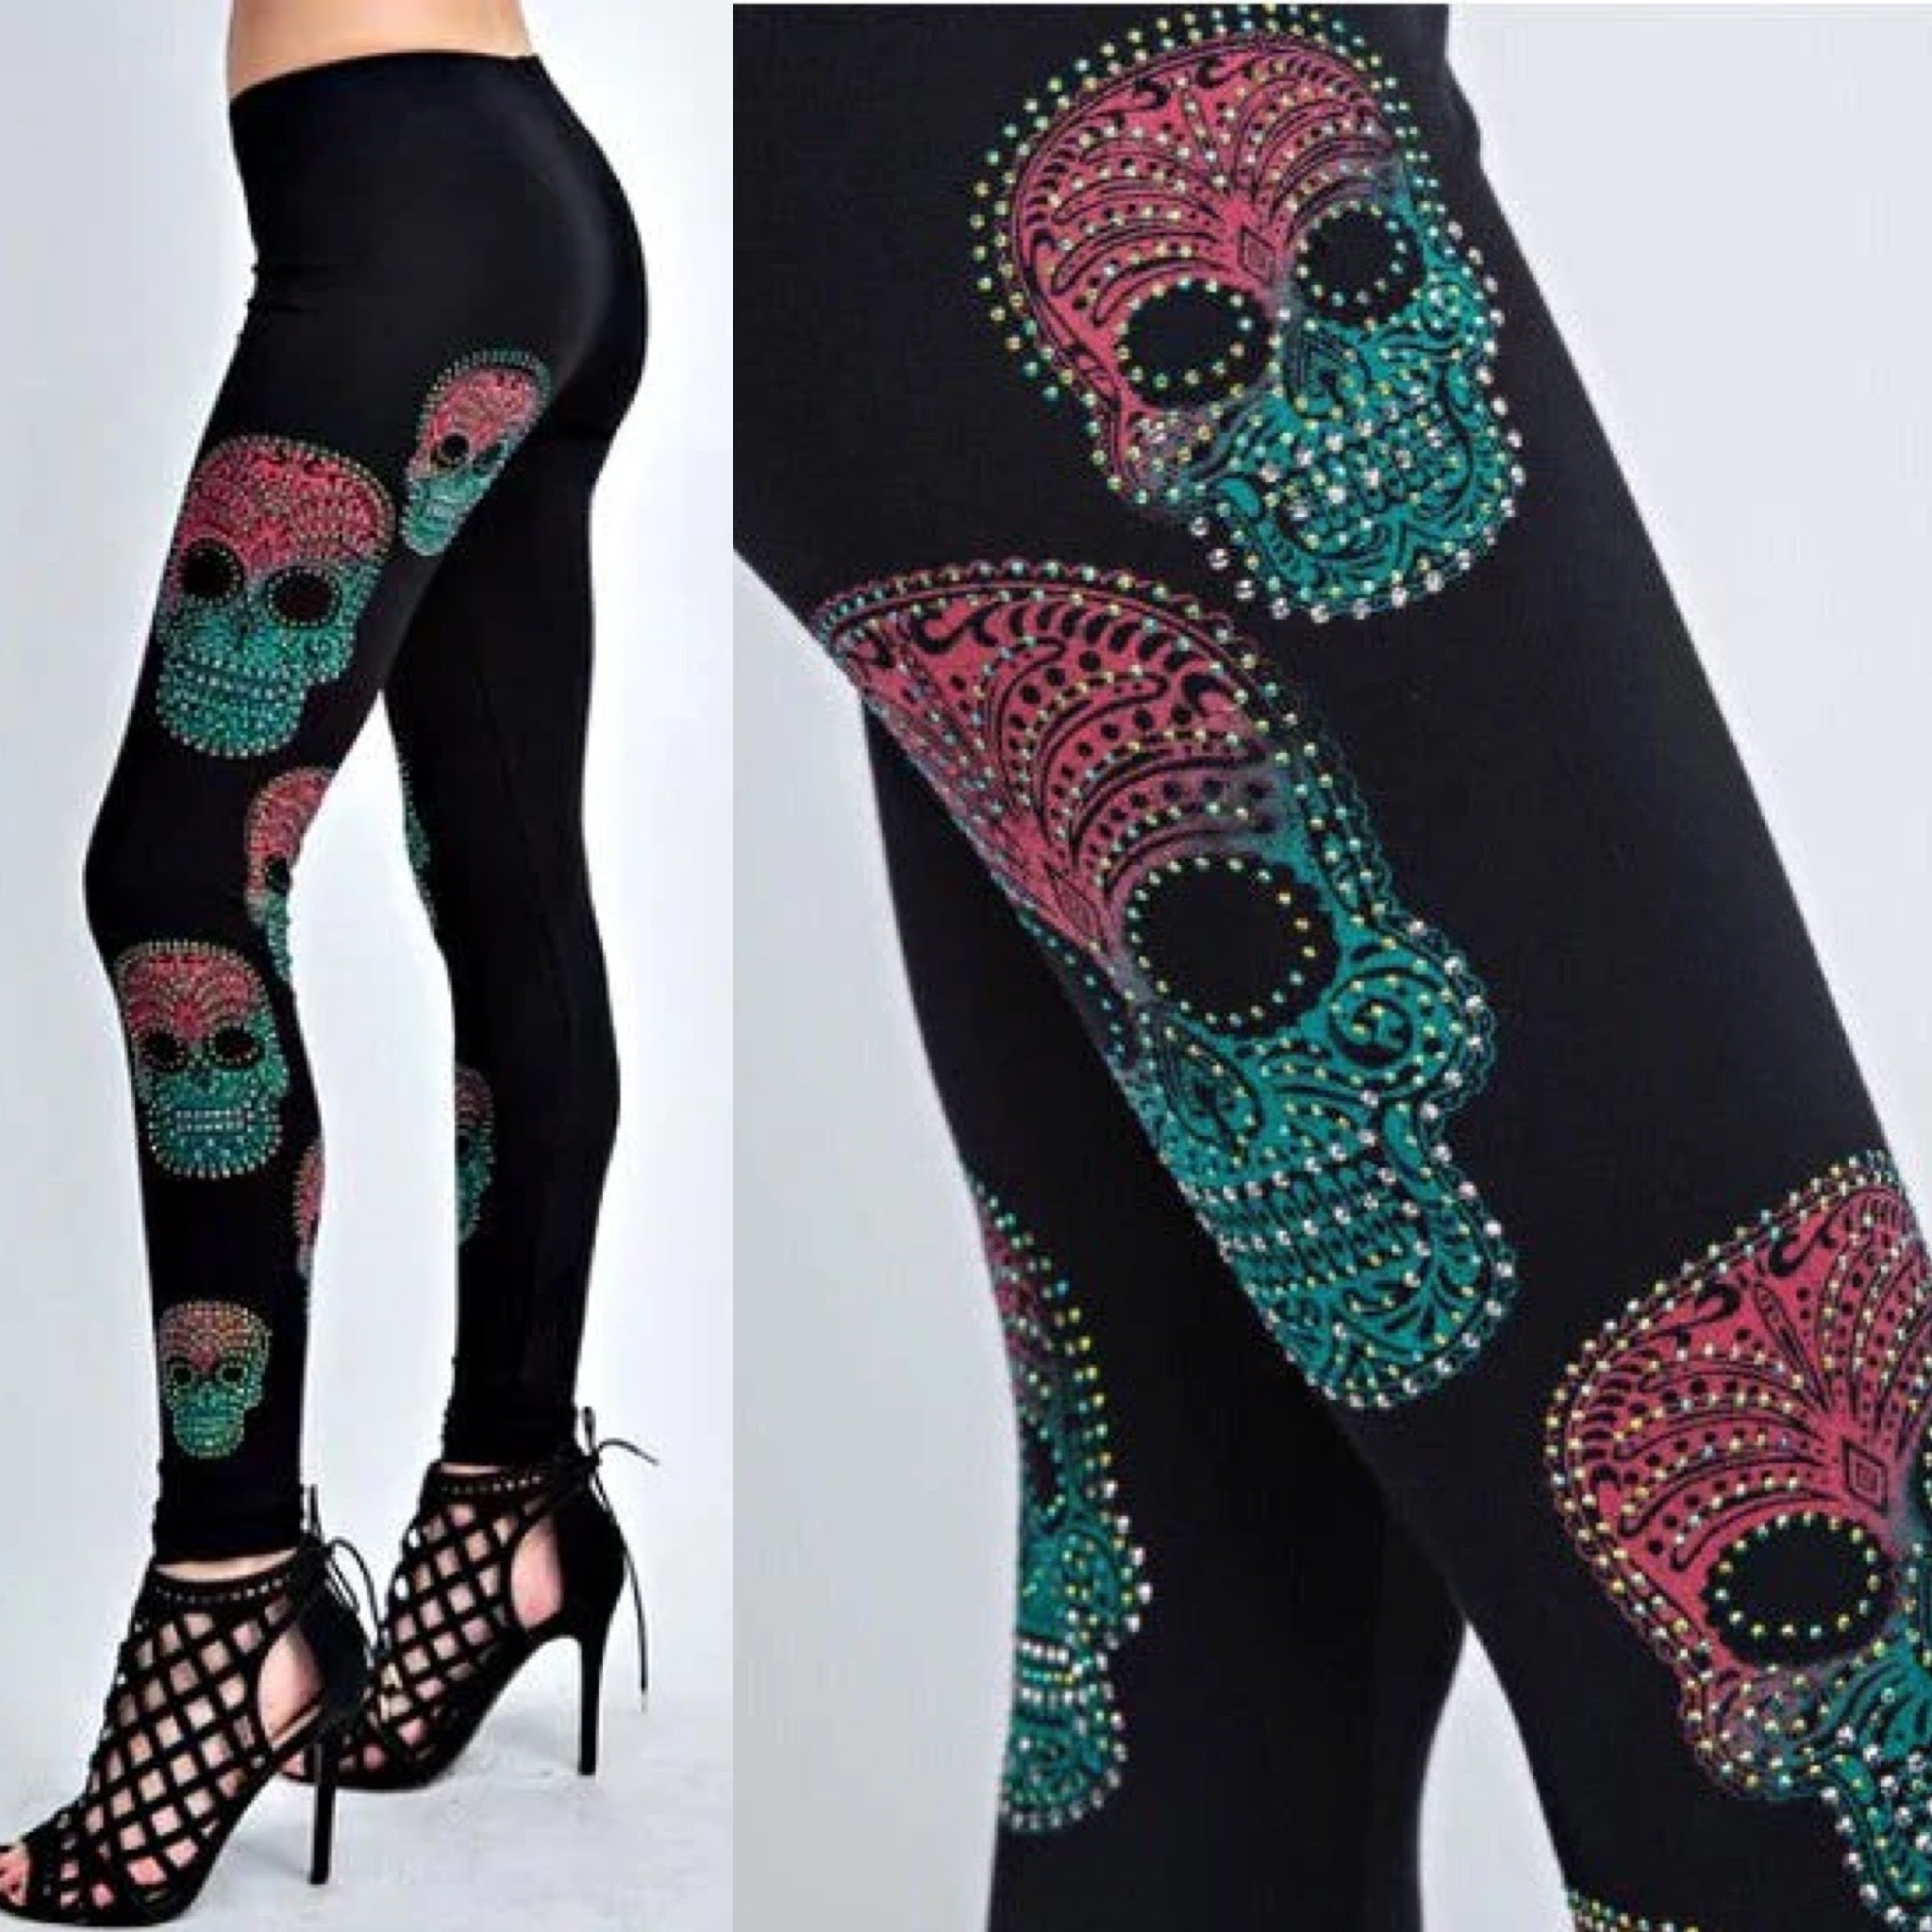 Black Leggings with Colorful Rhinestone Sugar Skulls